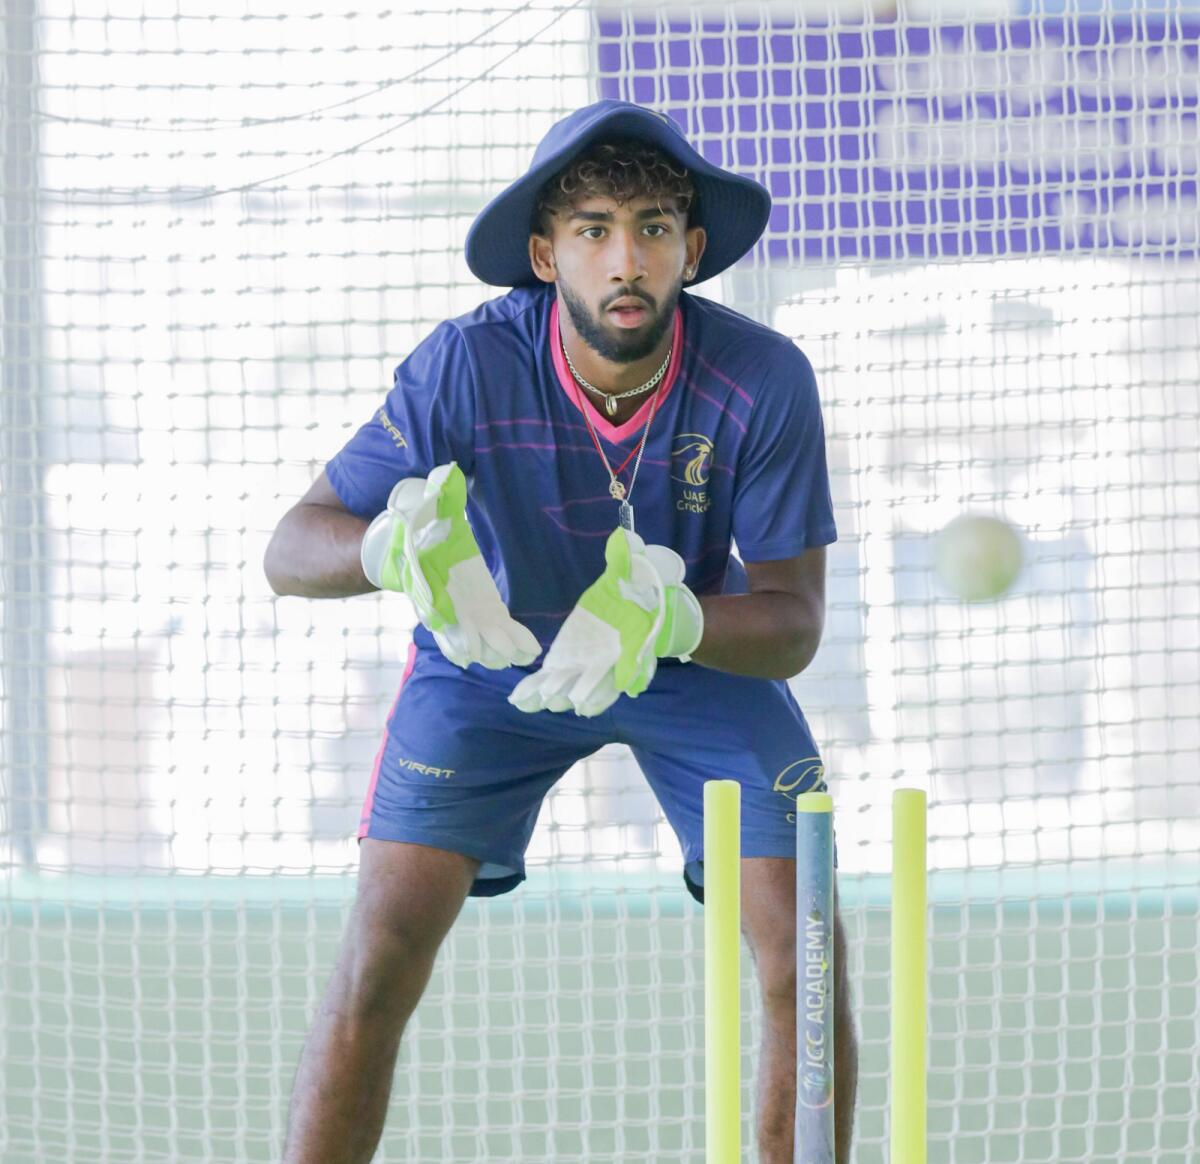 UAE's wicketkeeper-batter Vriitya Aravind. — Supplied photo